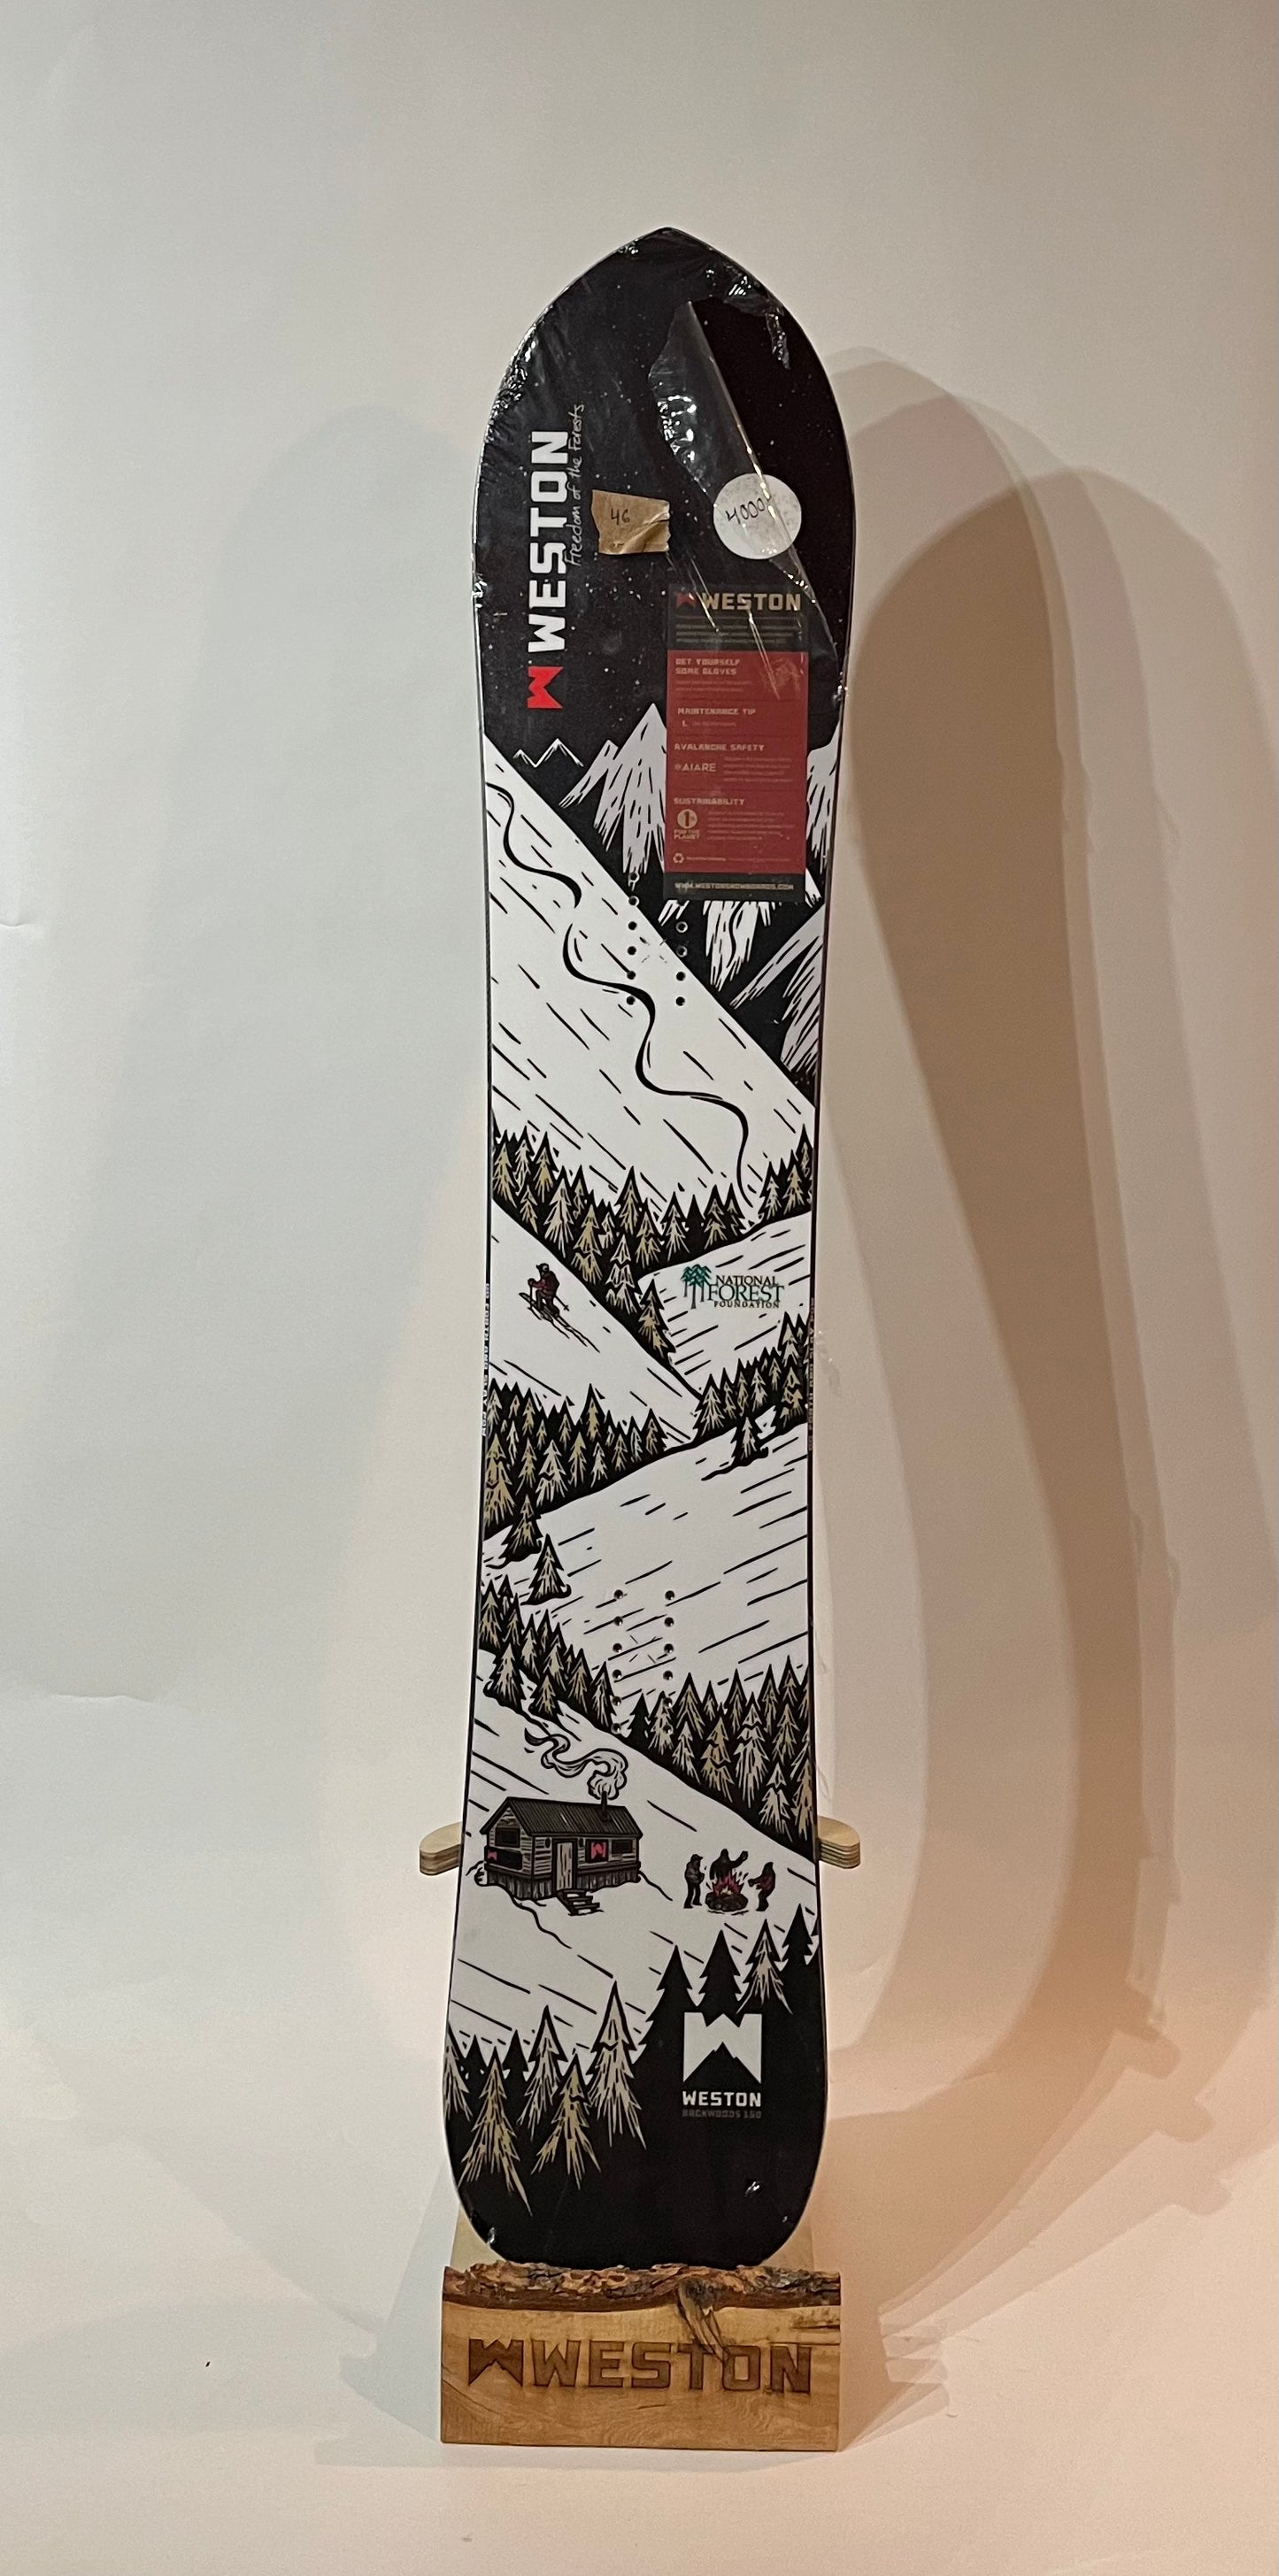 Backwoods Snowboard